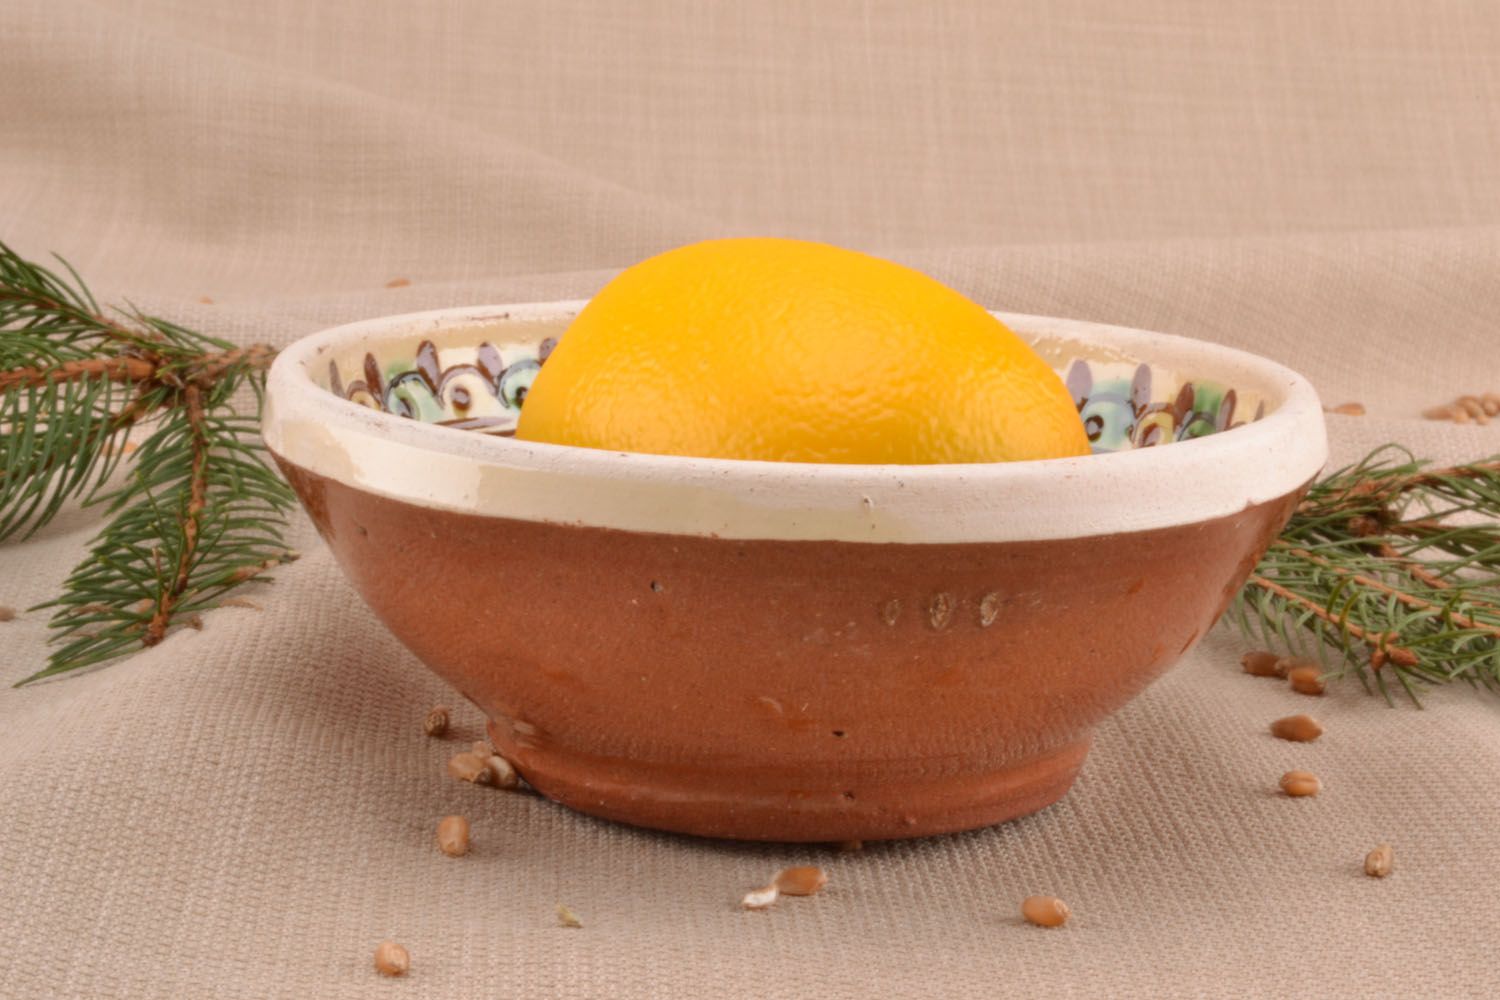 5 8 oz ceramic glazed village-style handmade pitch bowl 0,45 lb photo 1